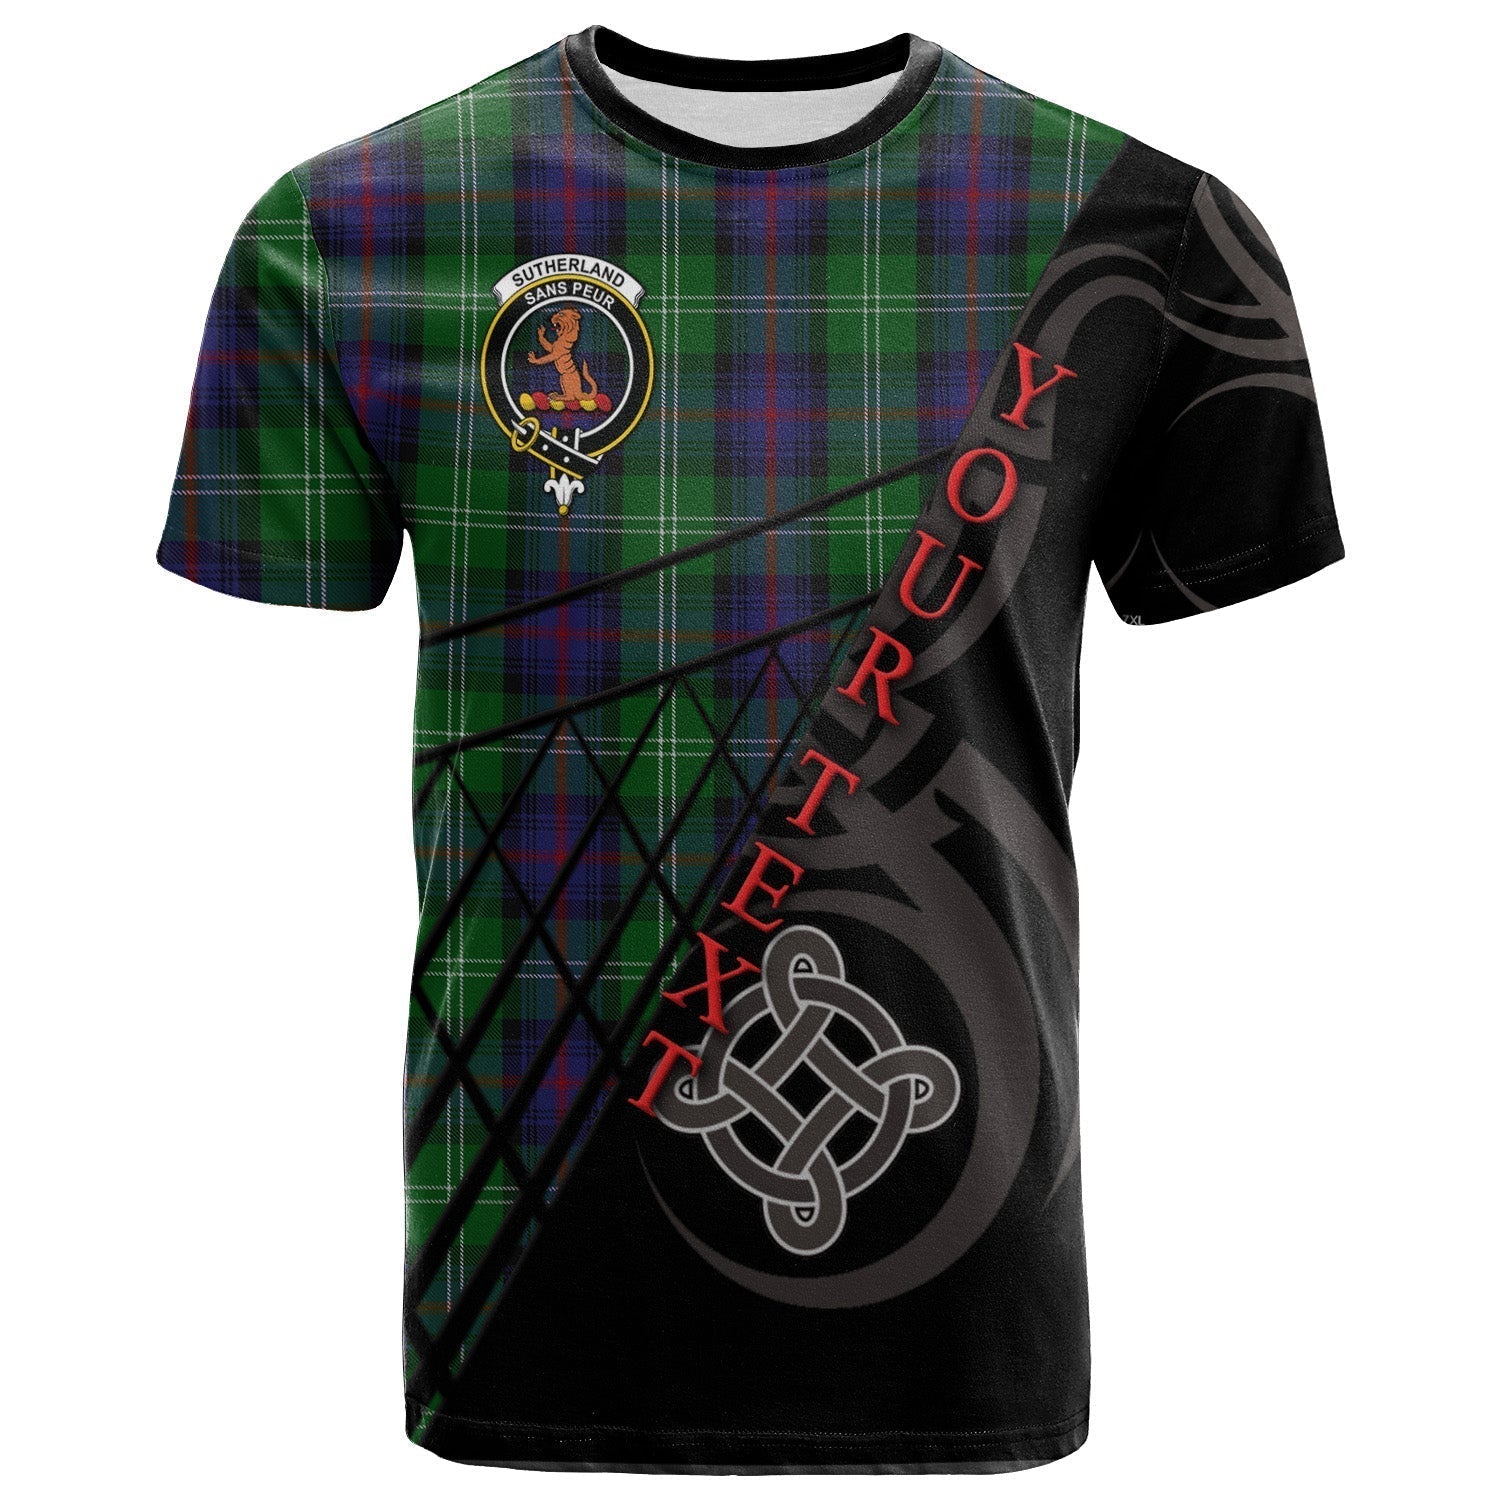 scottish-sutherland-01-clan-crest-tartan-pattern-celtic-t-shirt